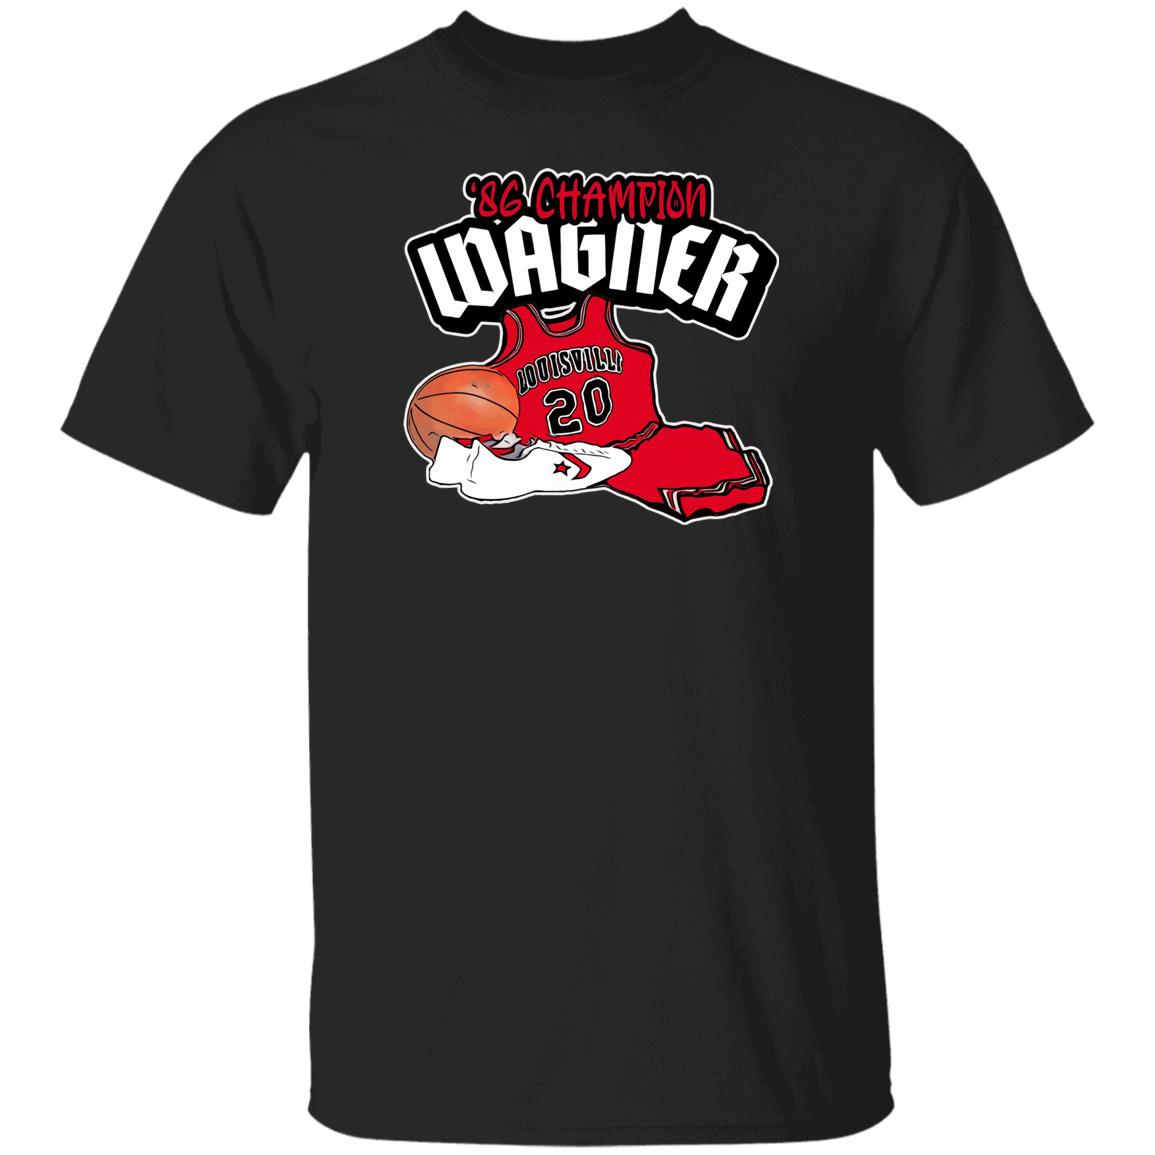 Milt Wagner Tee Shirt ’86 Champion Wagner Hooligantshirt